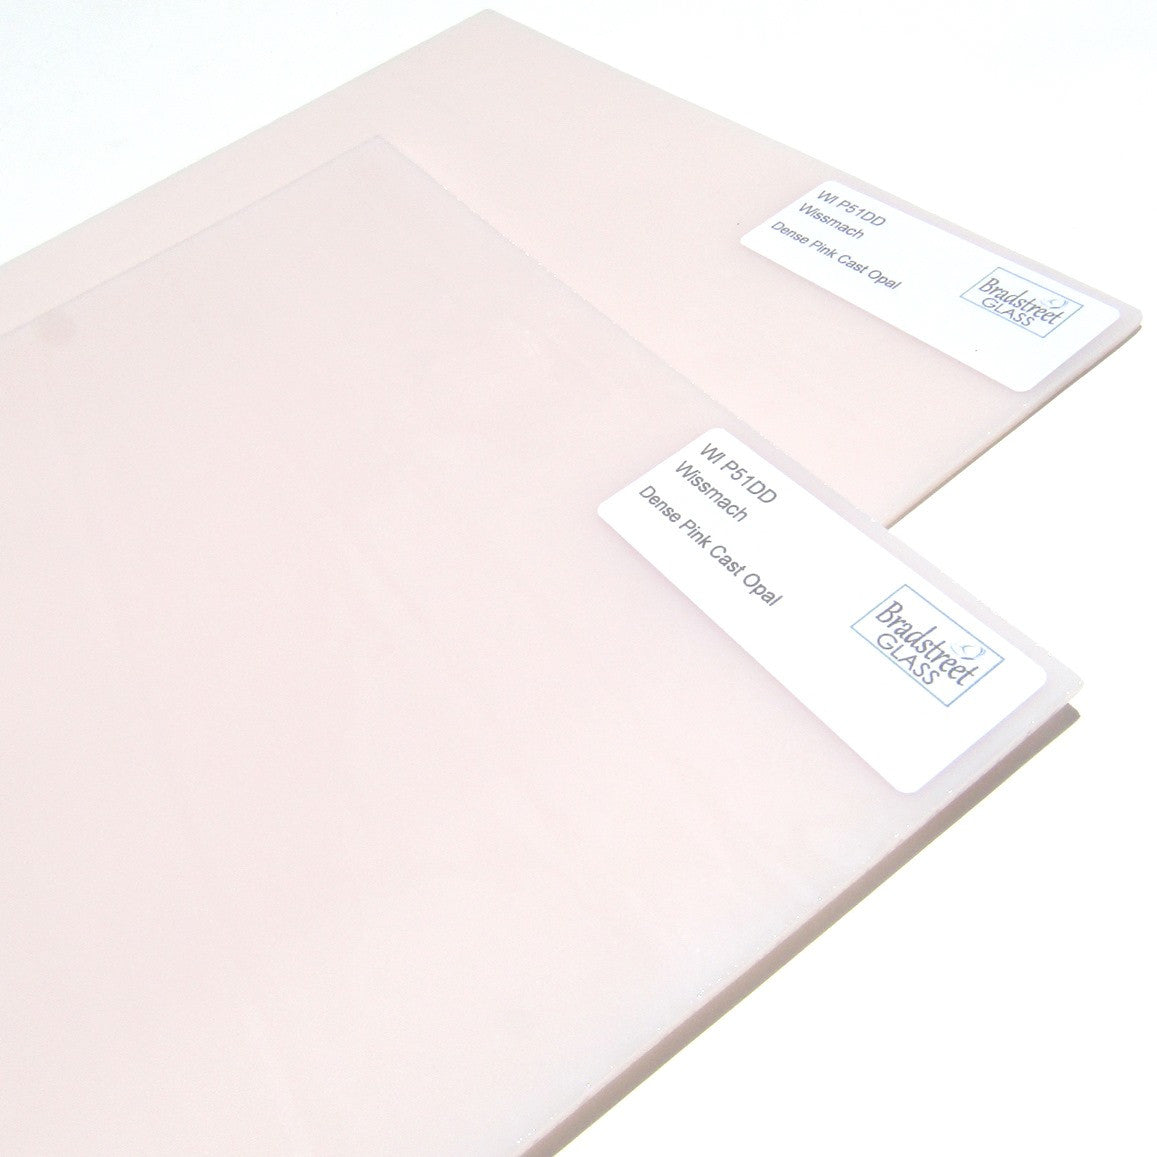 Wissmach Dense Pink Cast Opal Opaque Stained Glass Sheet WI P51DD